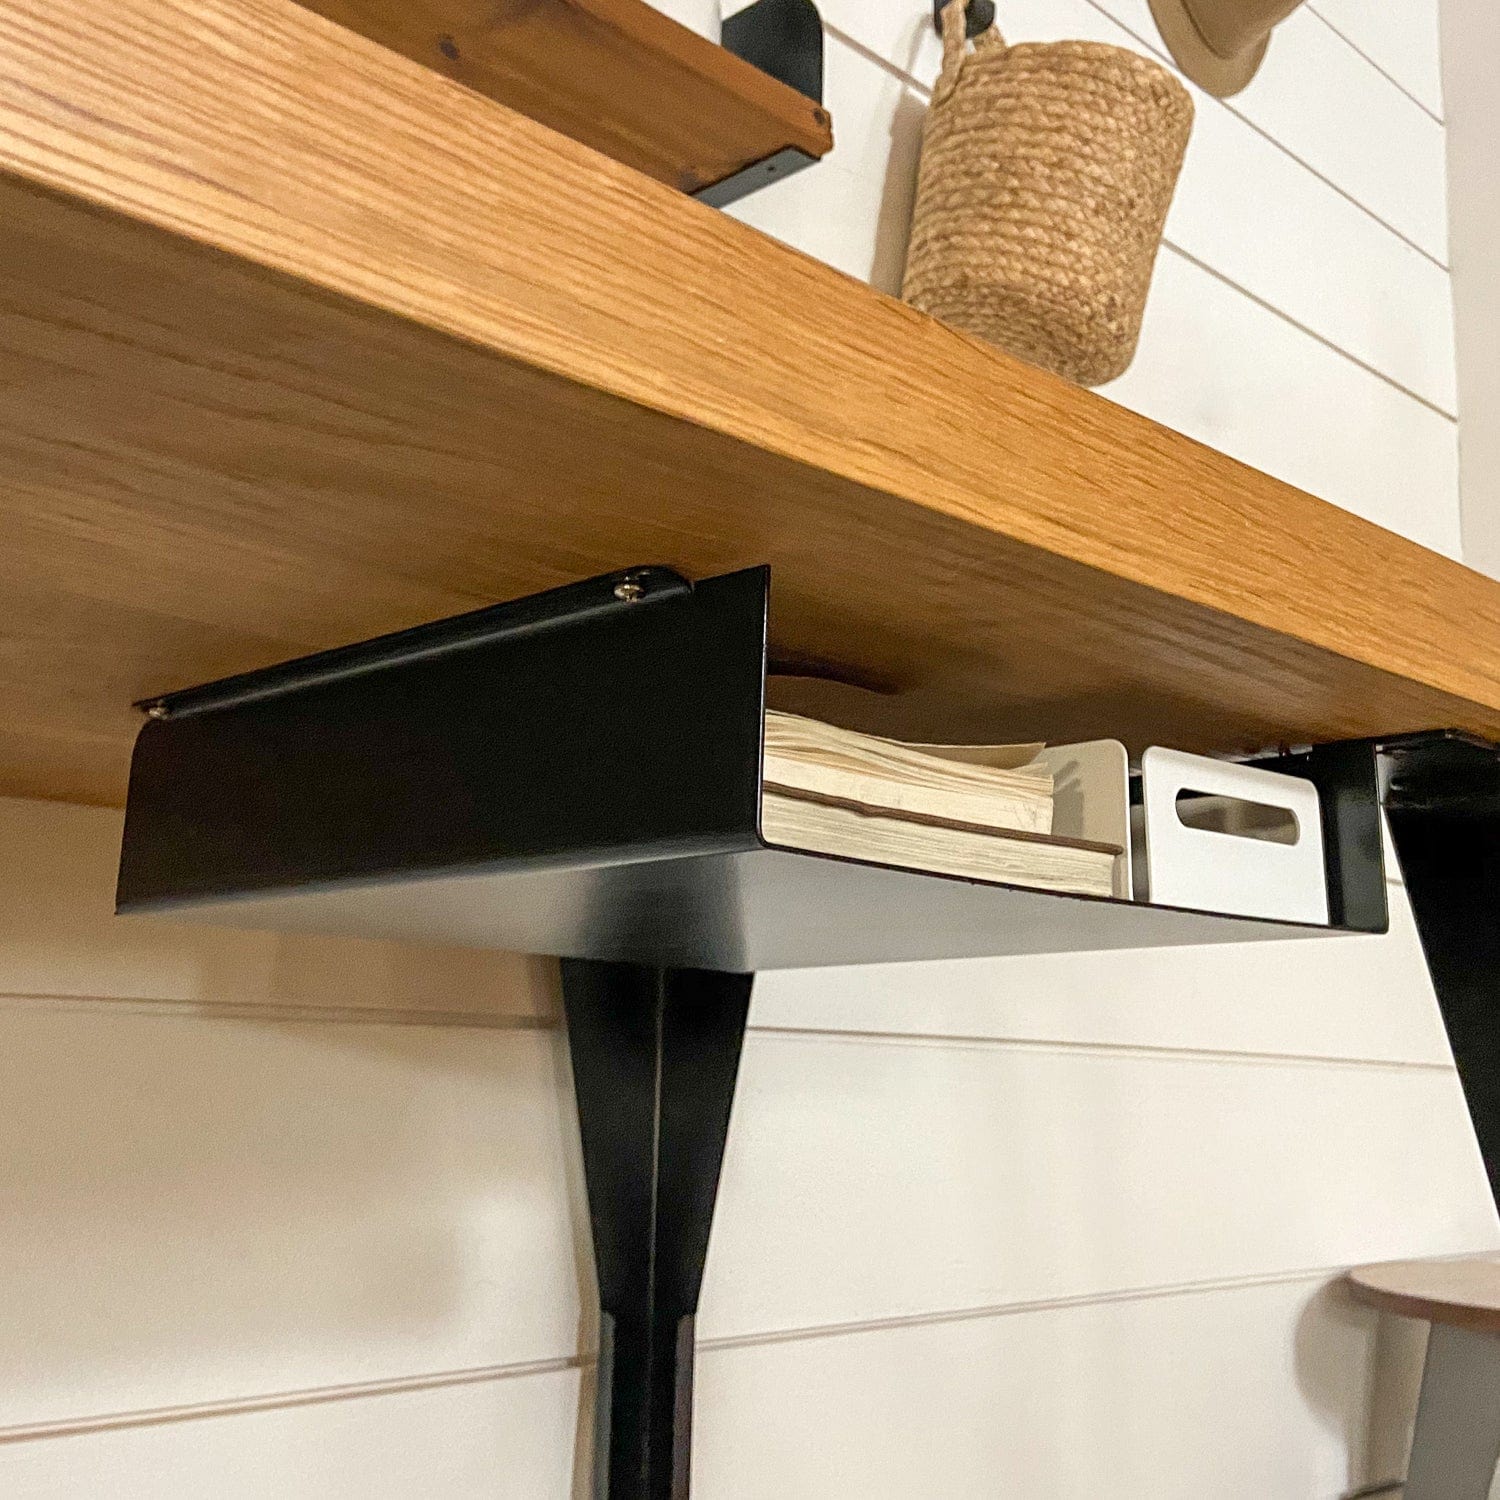 ElevationShelf - The under-desk shelf that's easy to mount